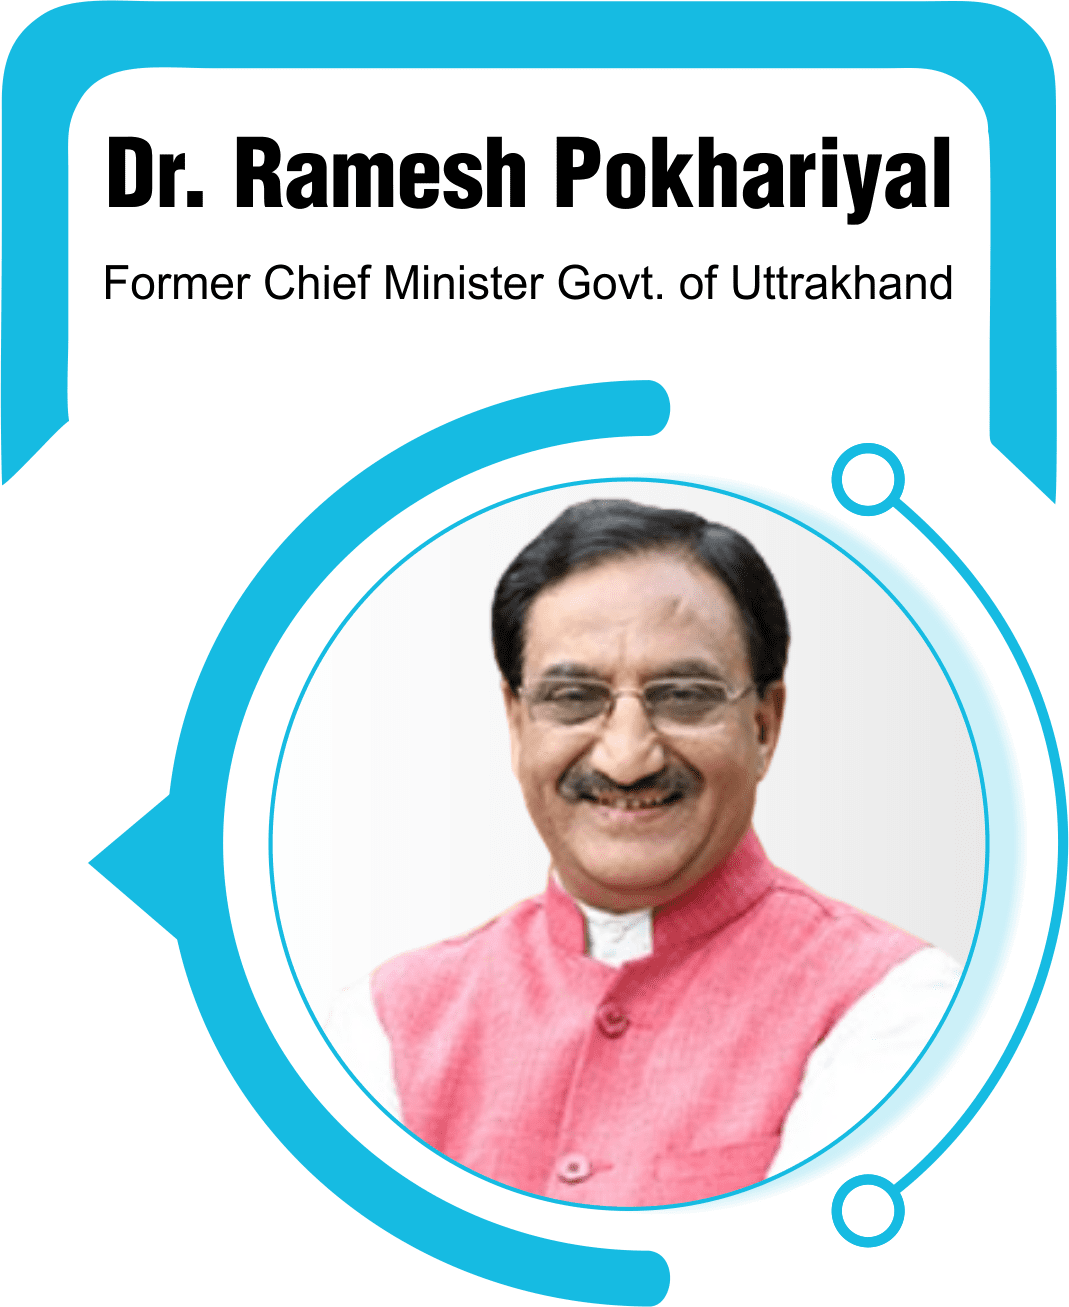 Dr. Ramesh Pokhariyal